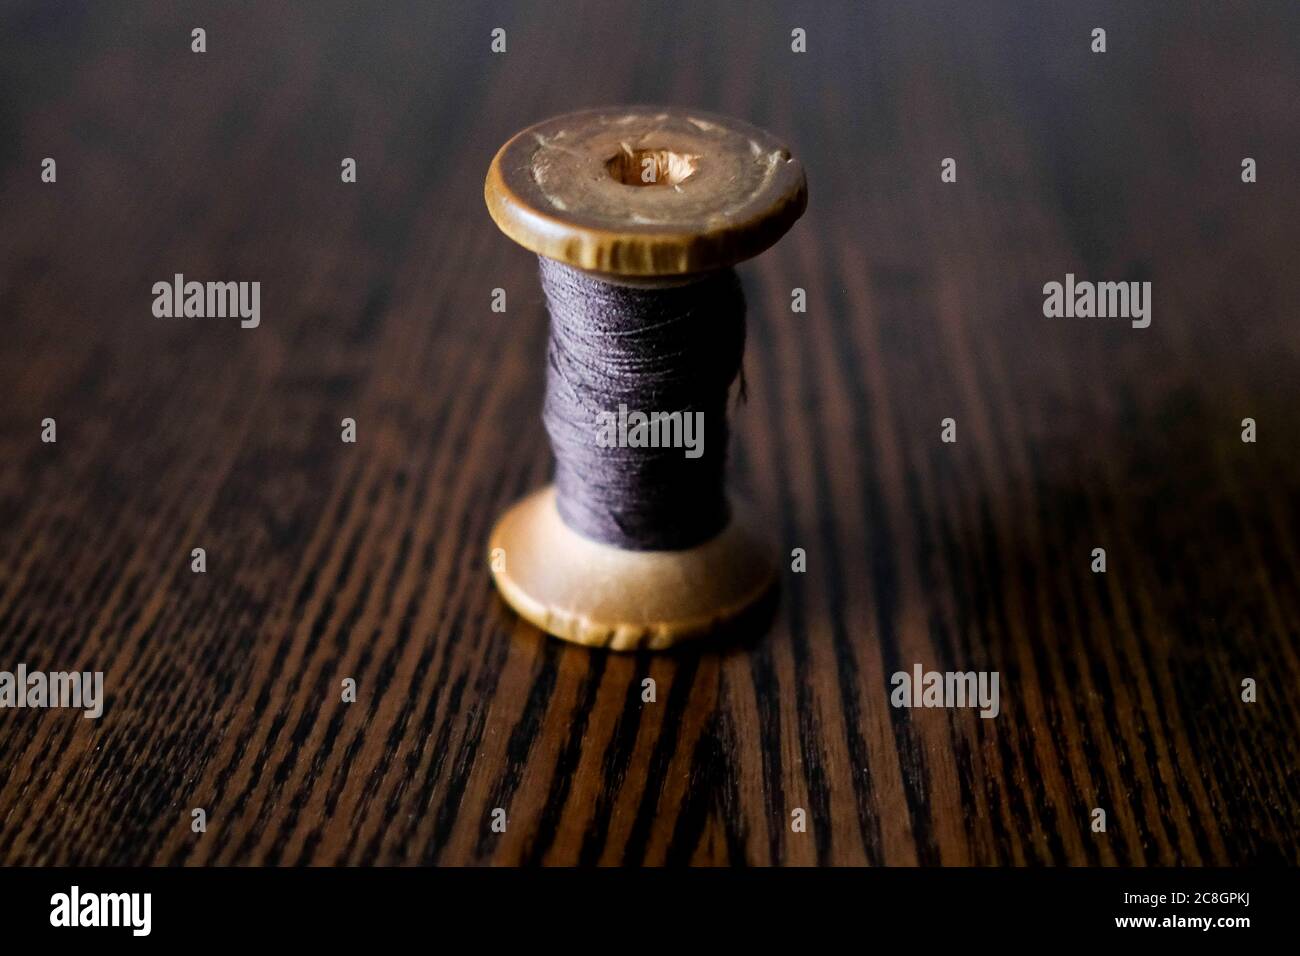 Wooden spool of thread. Purple thin thread. Dark background. Stock Photo